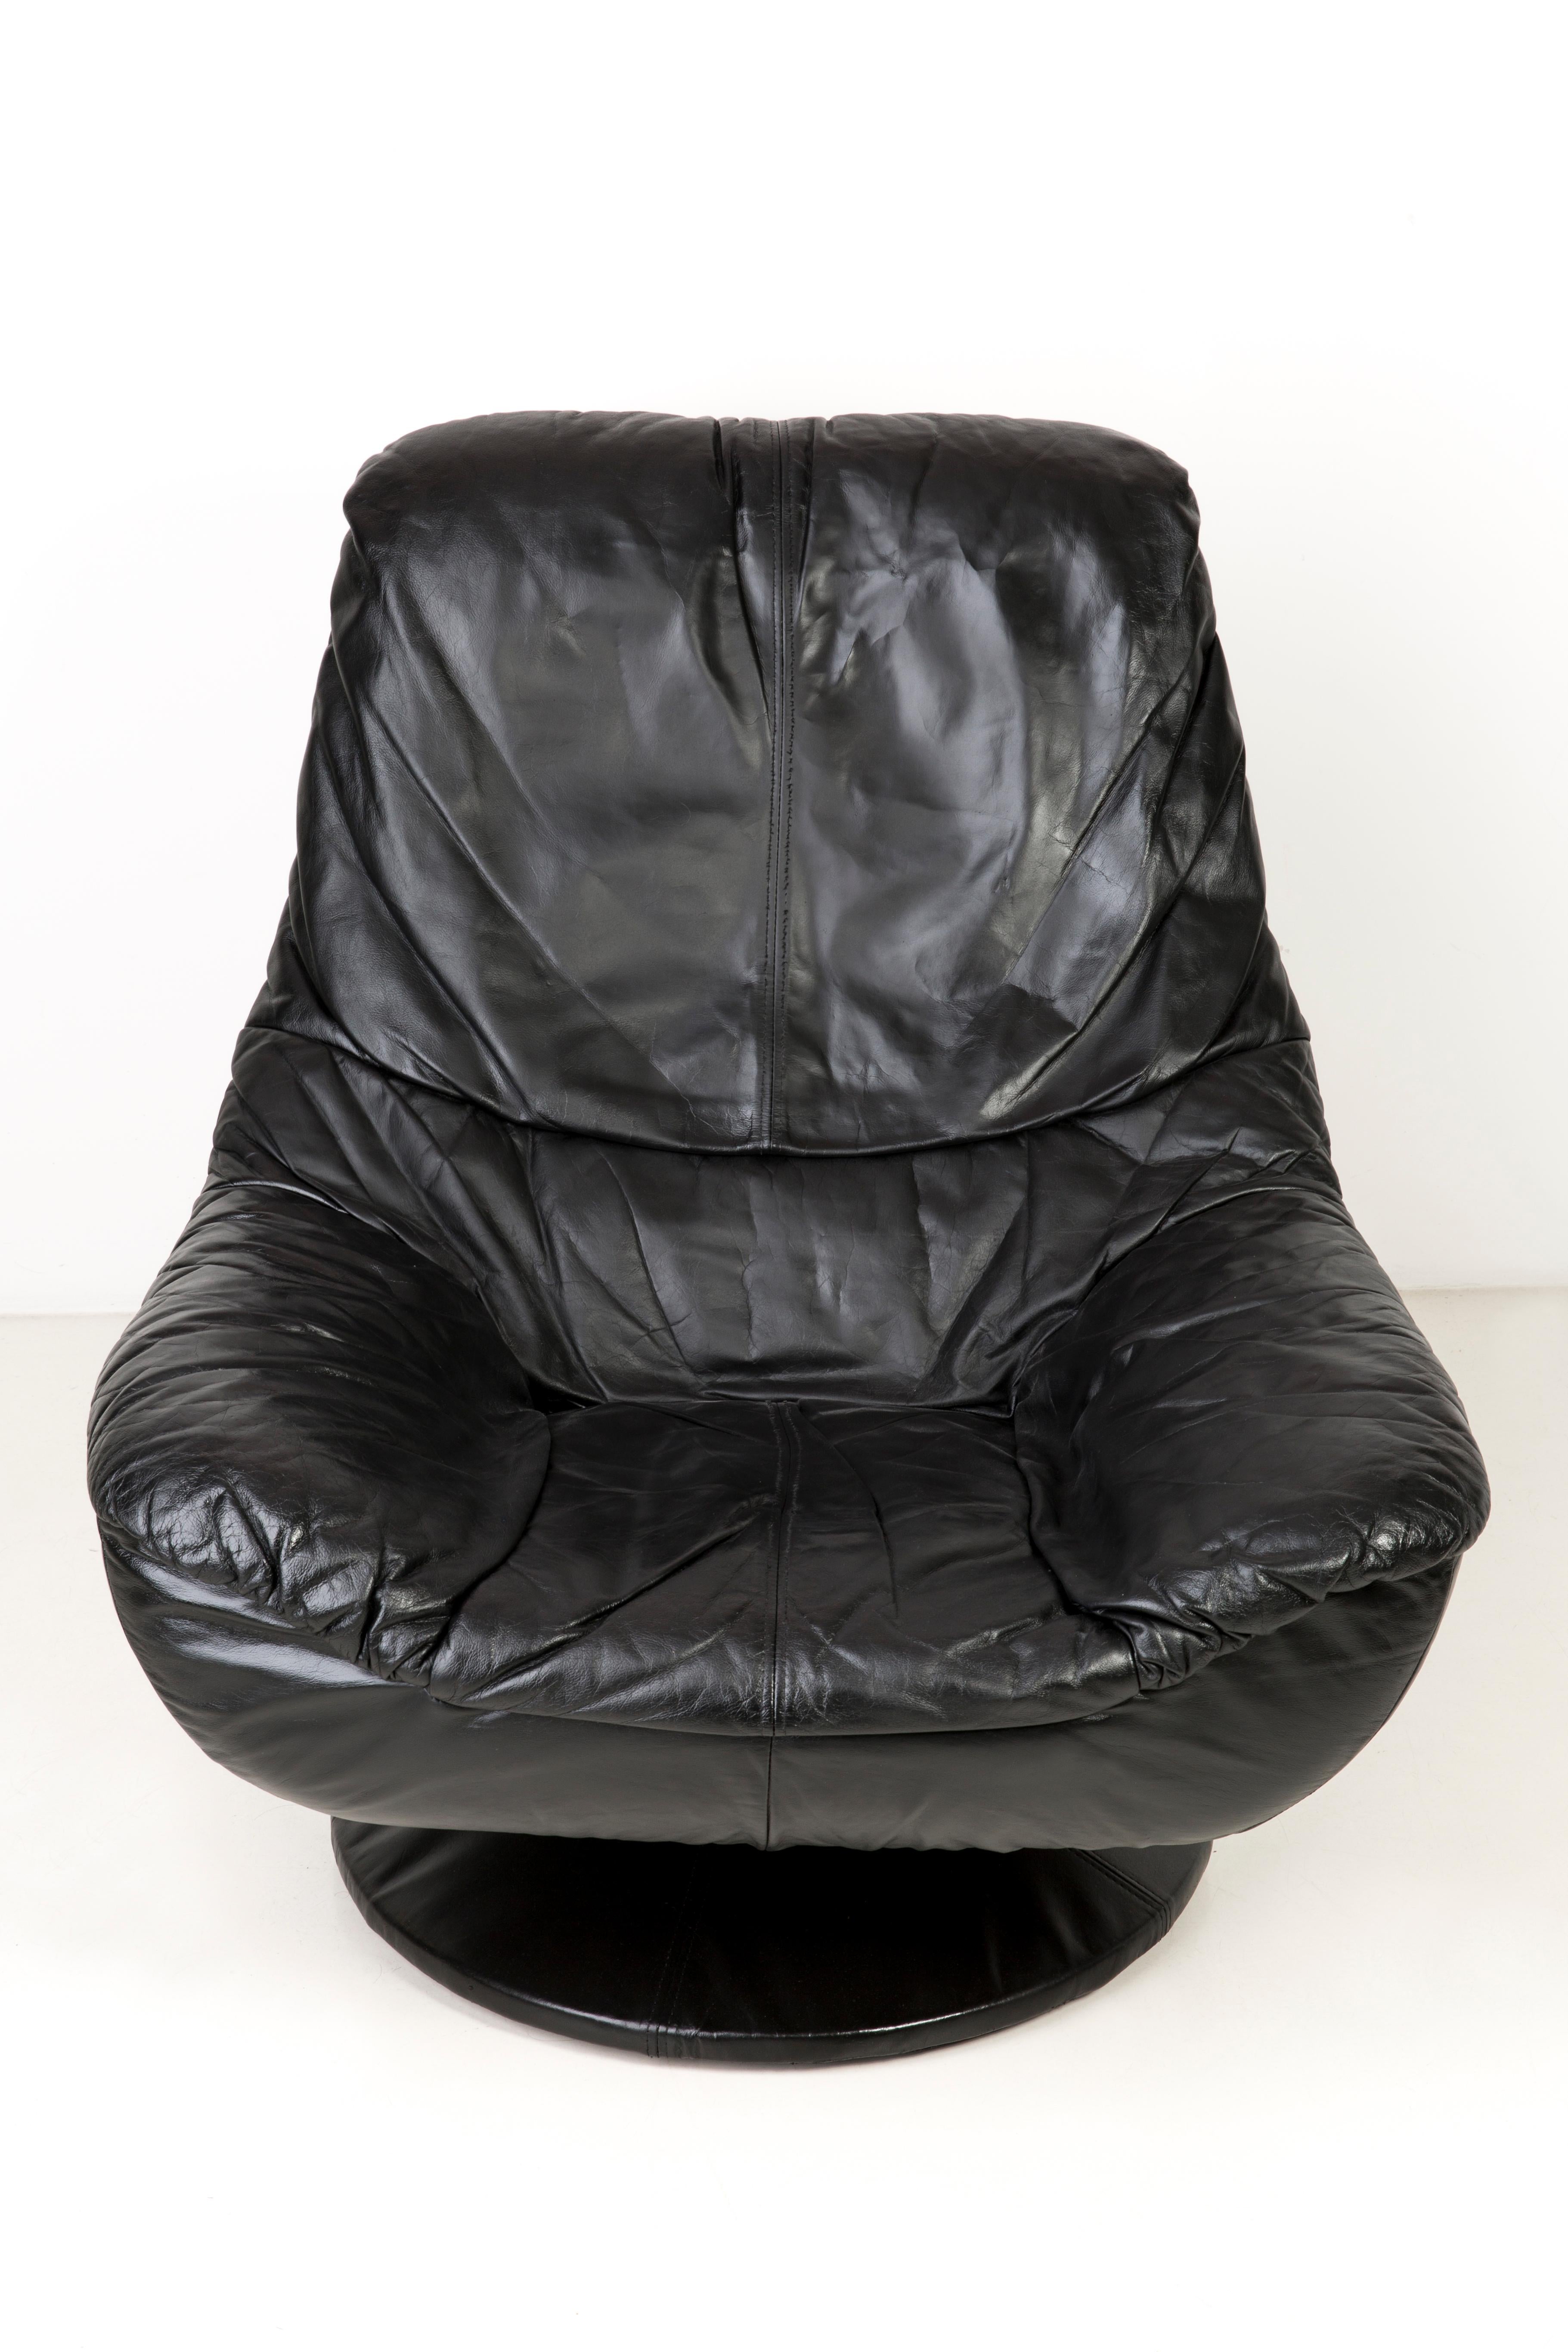 vintage black leather chair